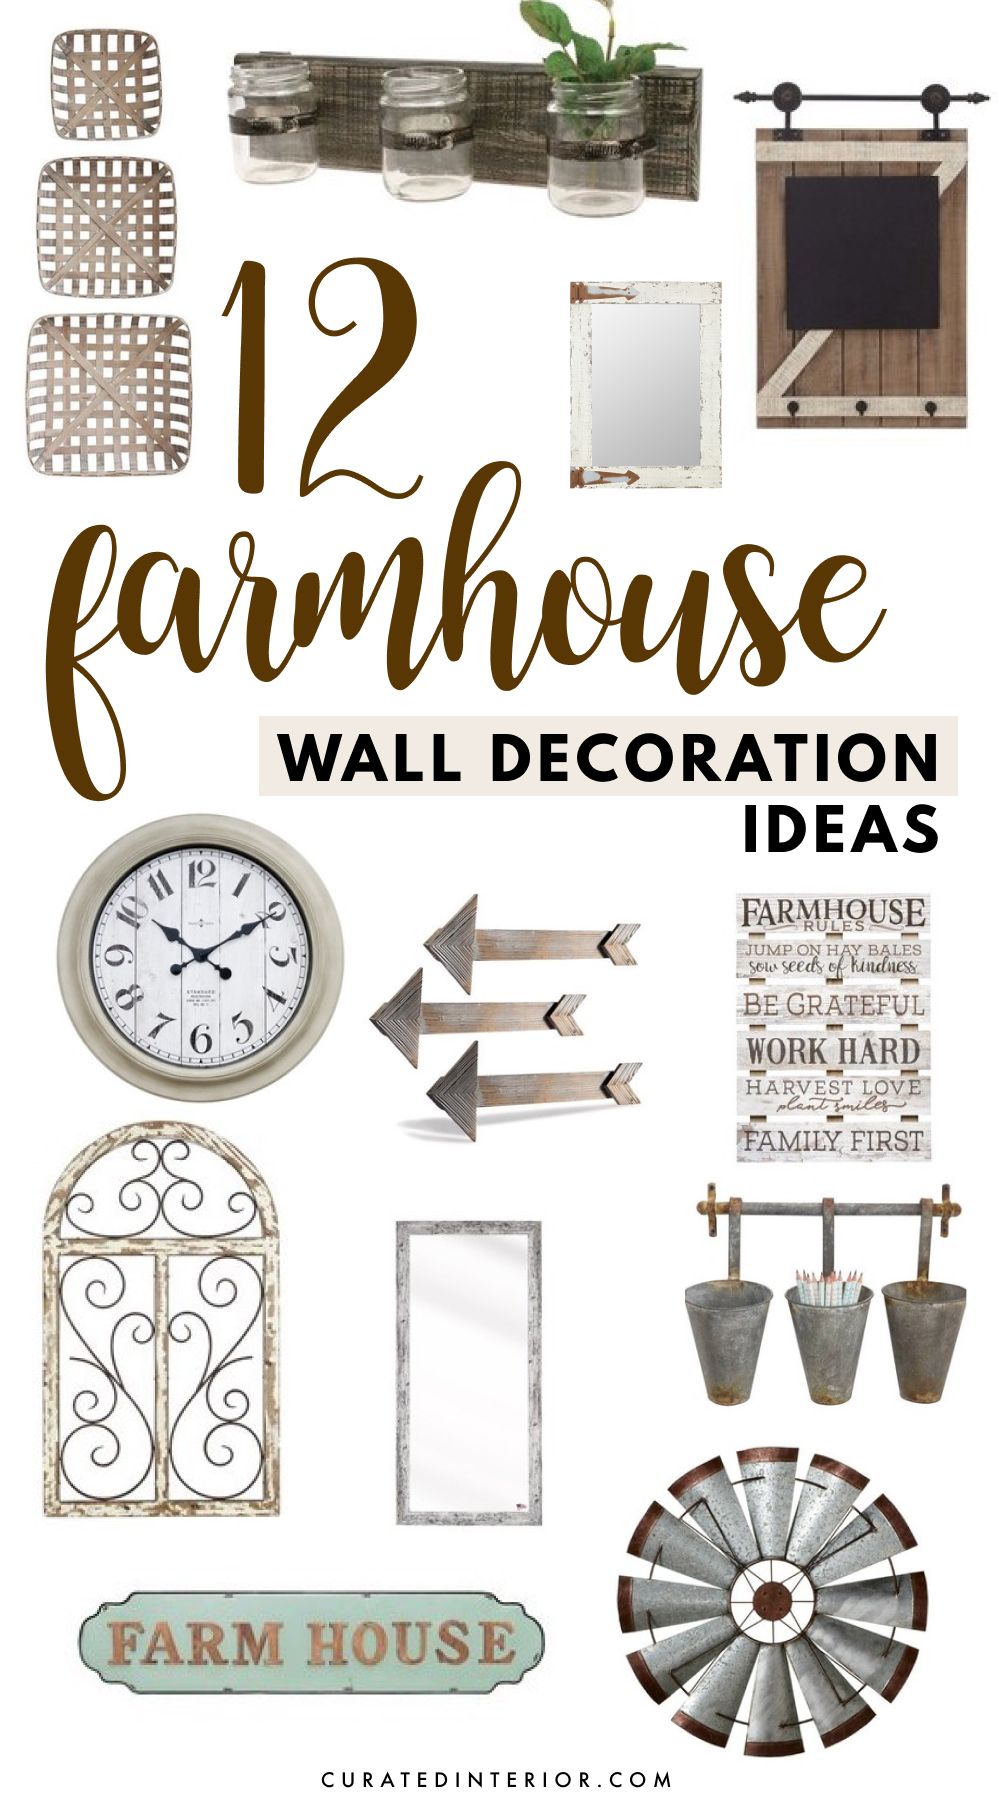 12 Farmhouse Wall Decoration Ideas